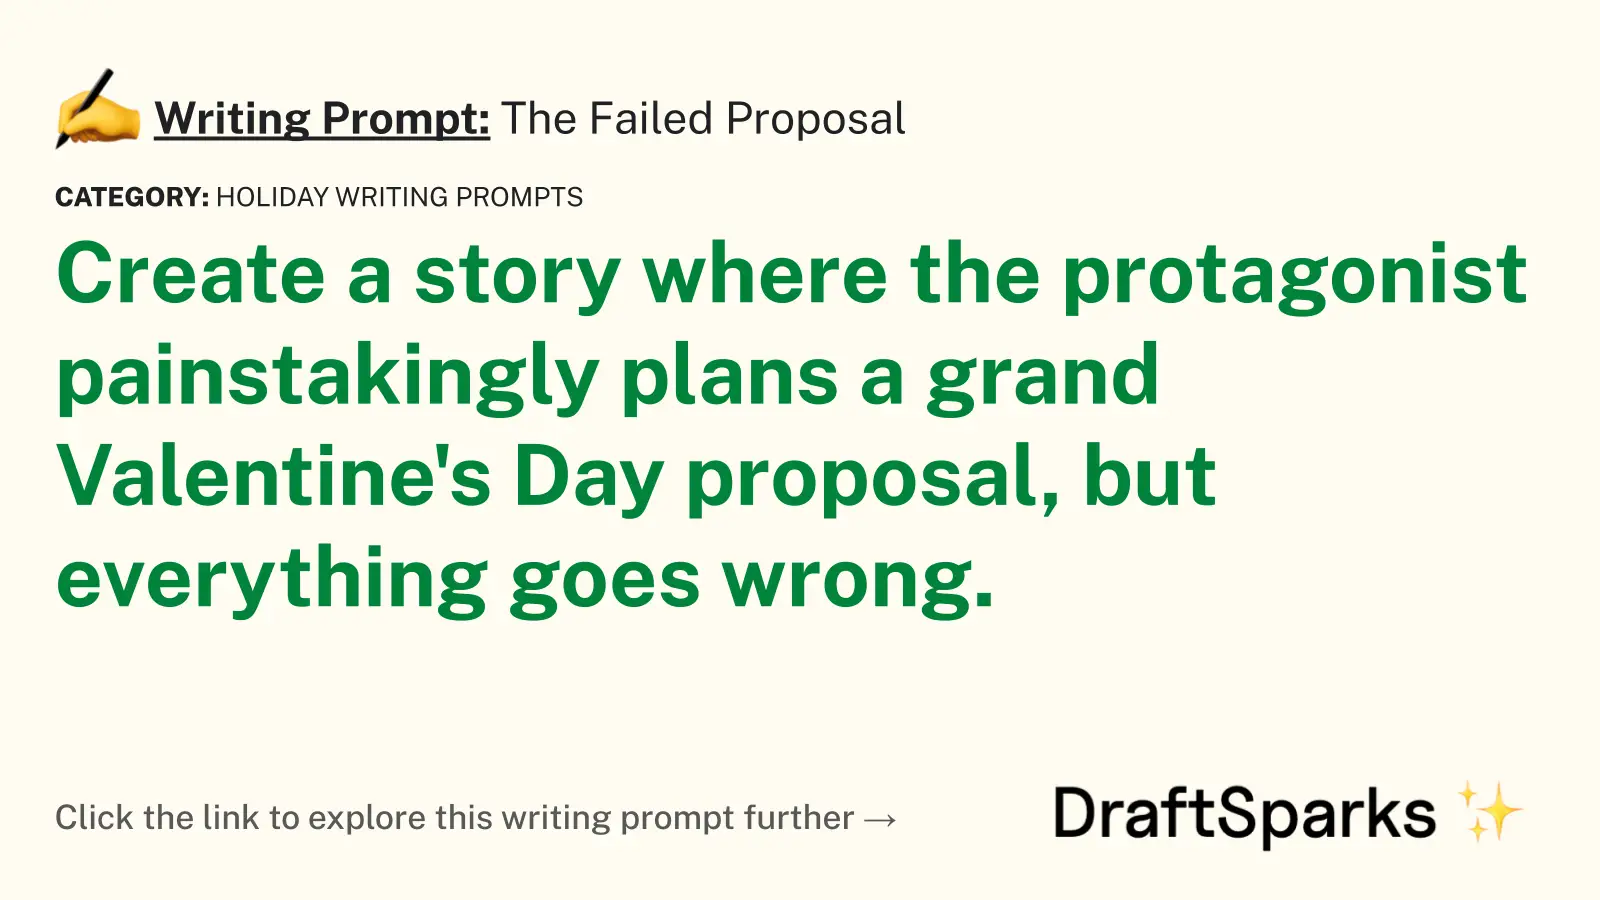 The Failed Proposal